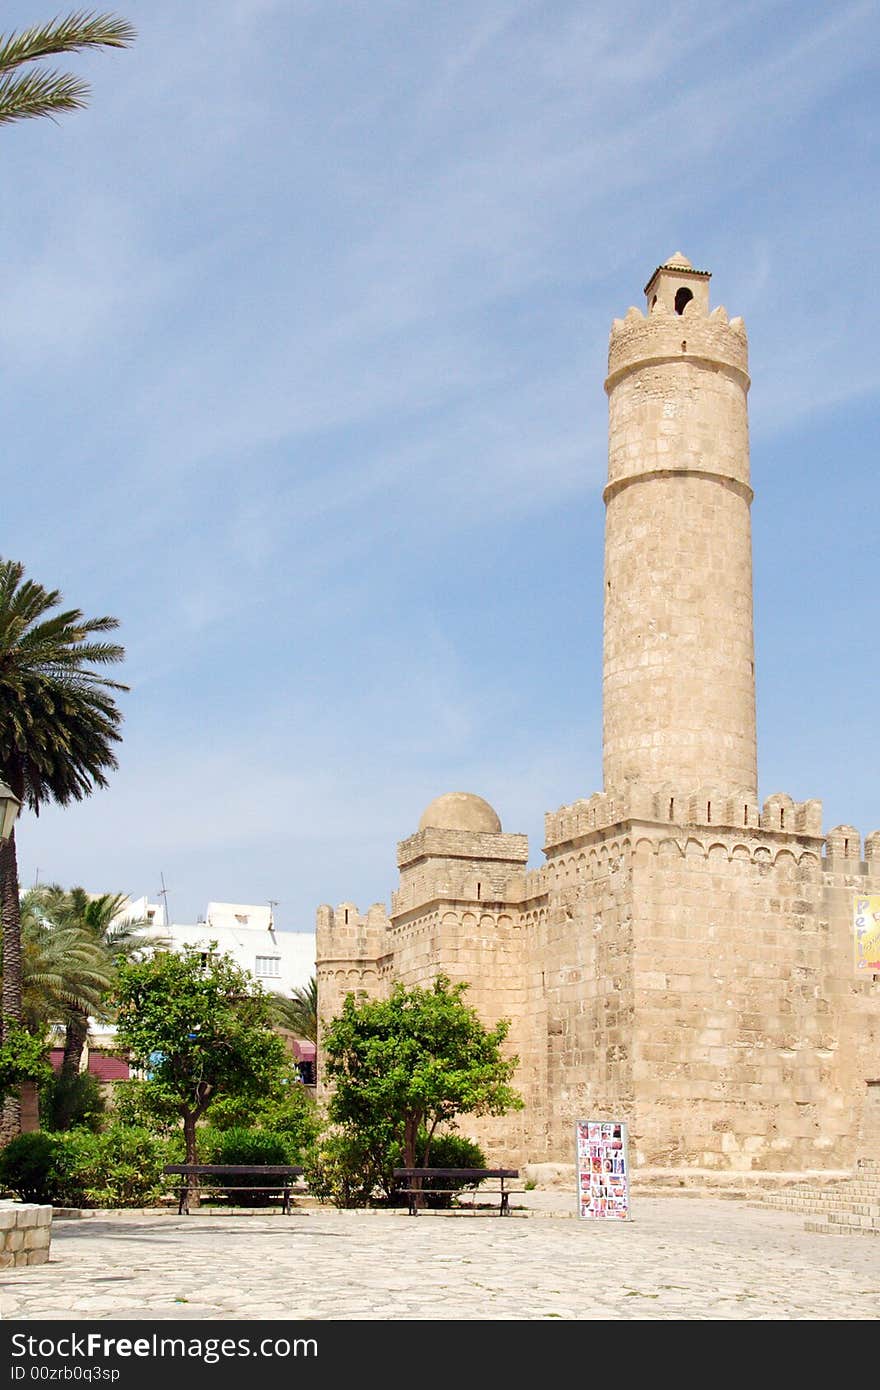 Old arabian tower on plaza. Old arabian tower on plaza